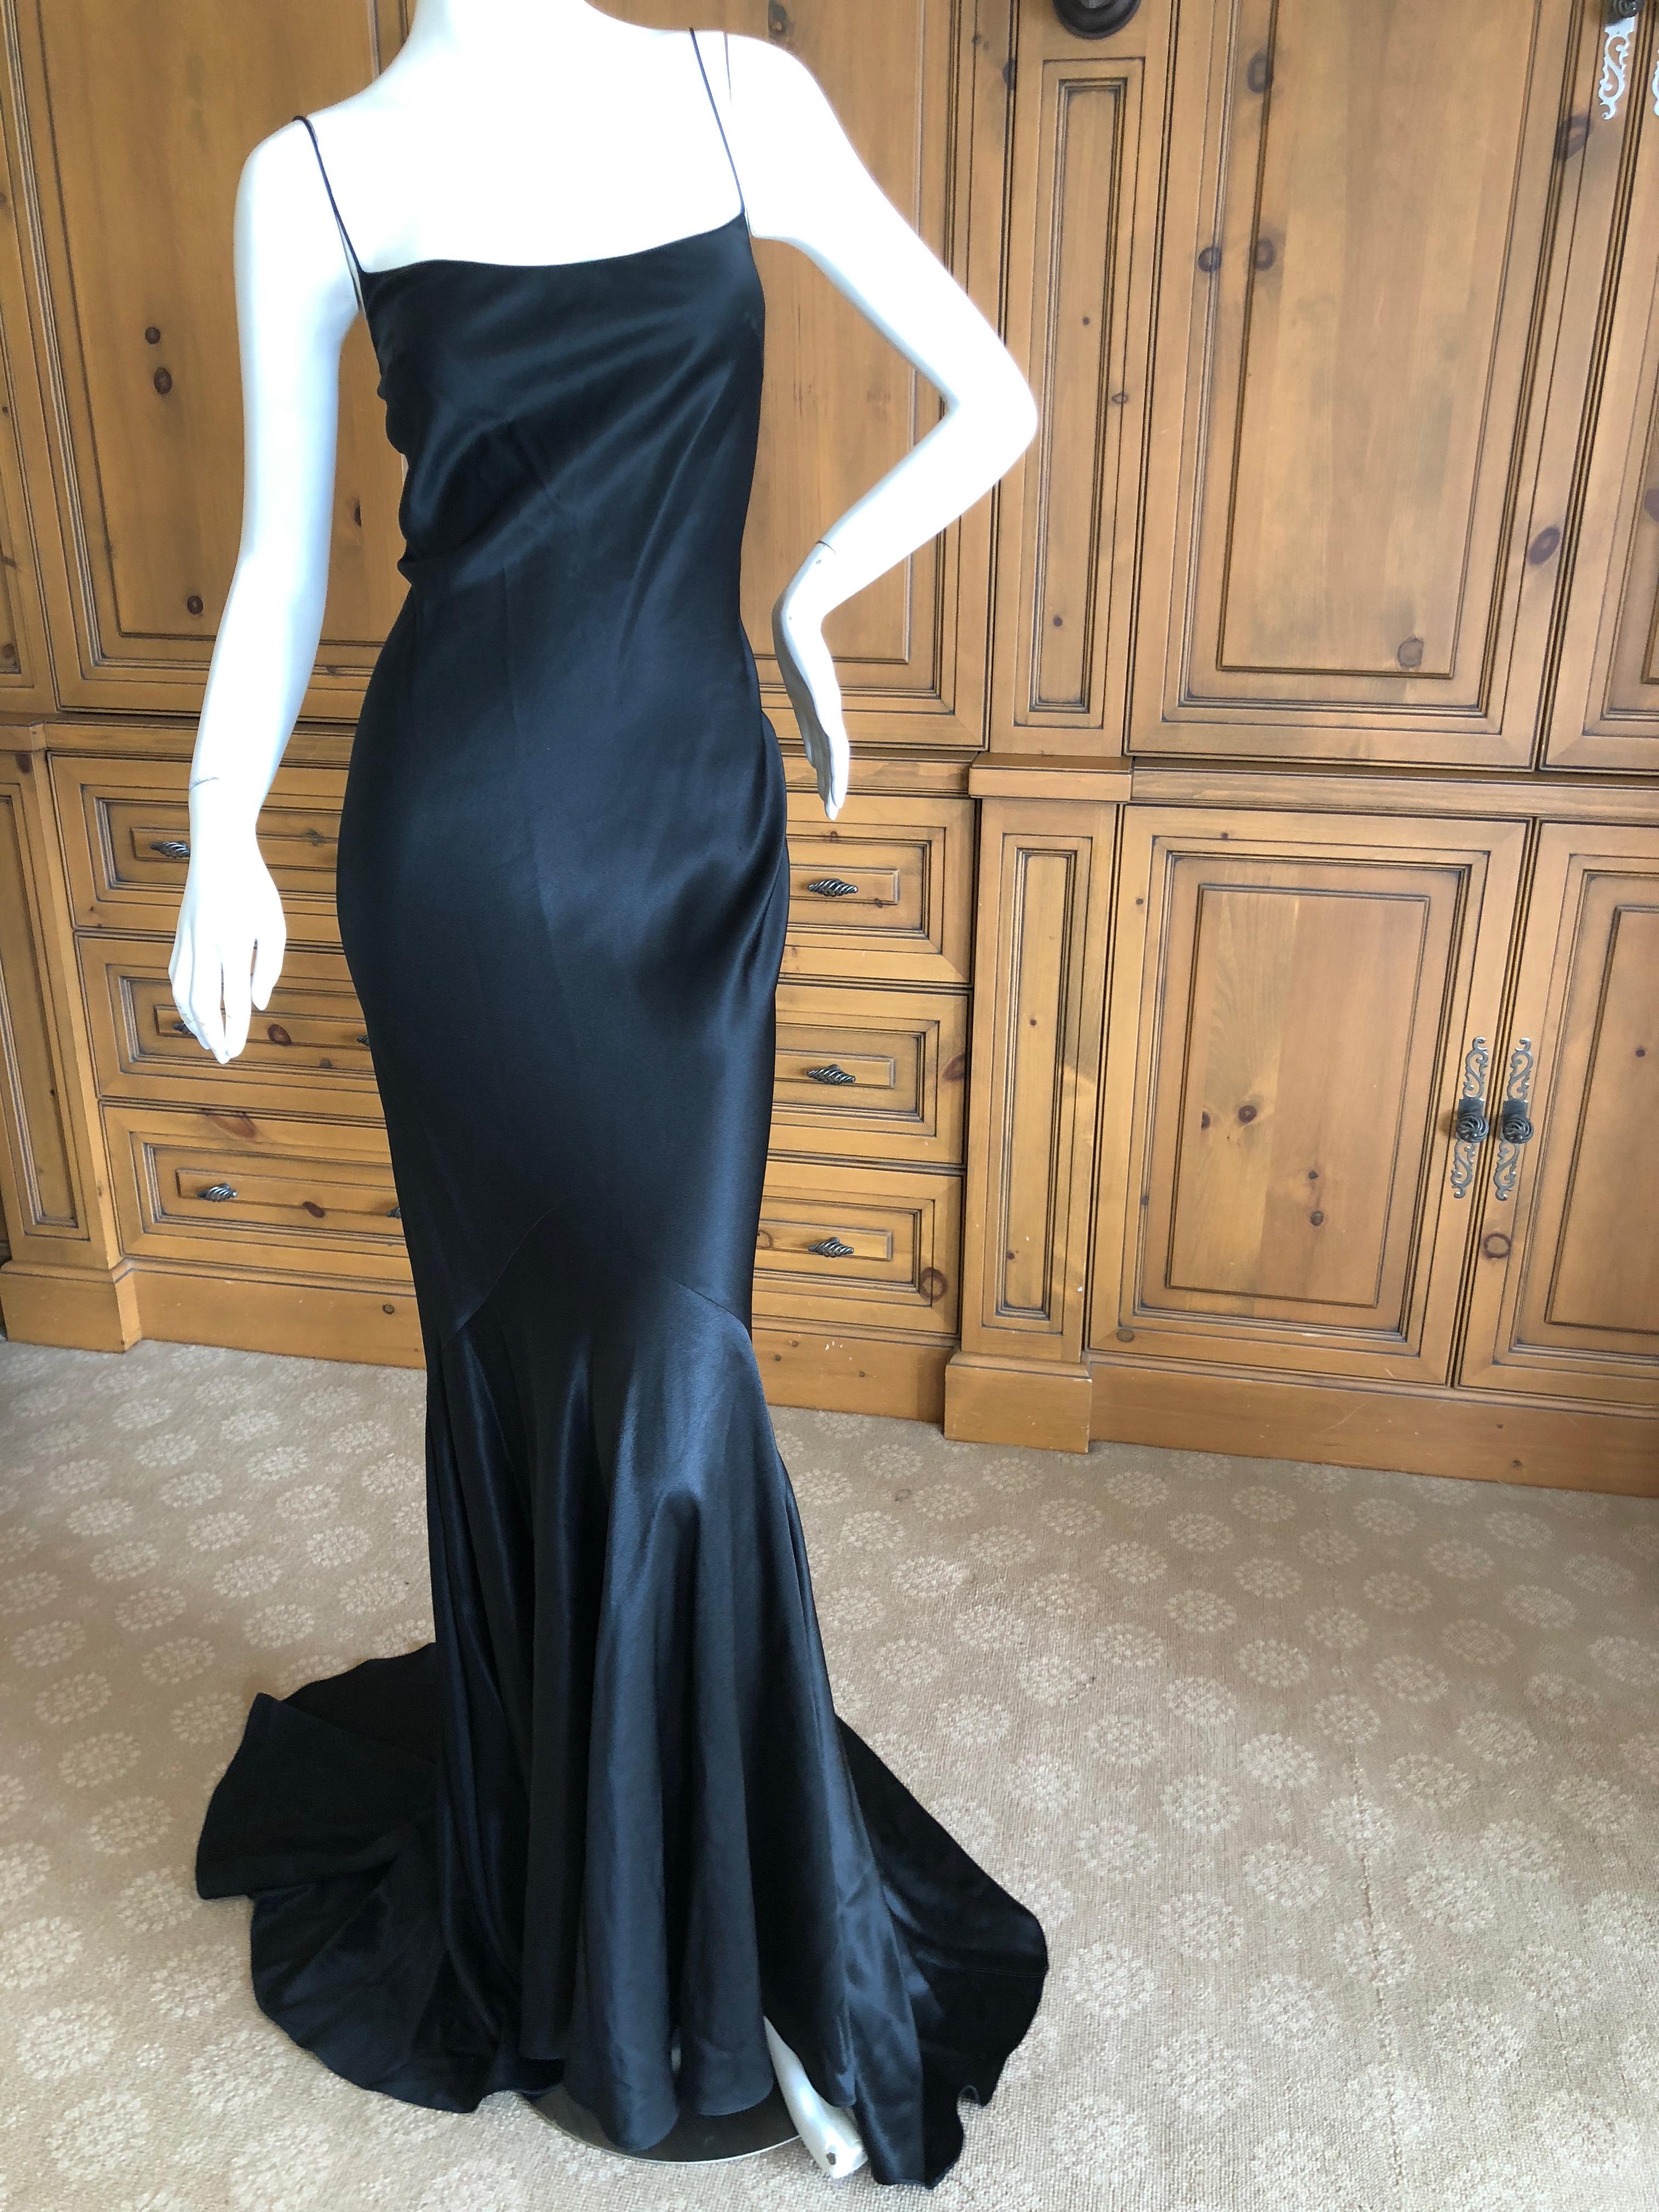 Women's John Galliano 1990's Bias Cut Black Slip Dress with Long Train For Sale